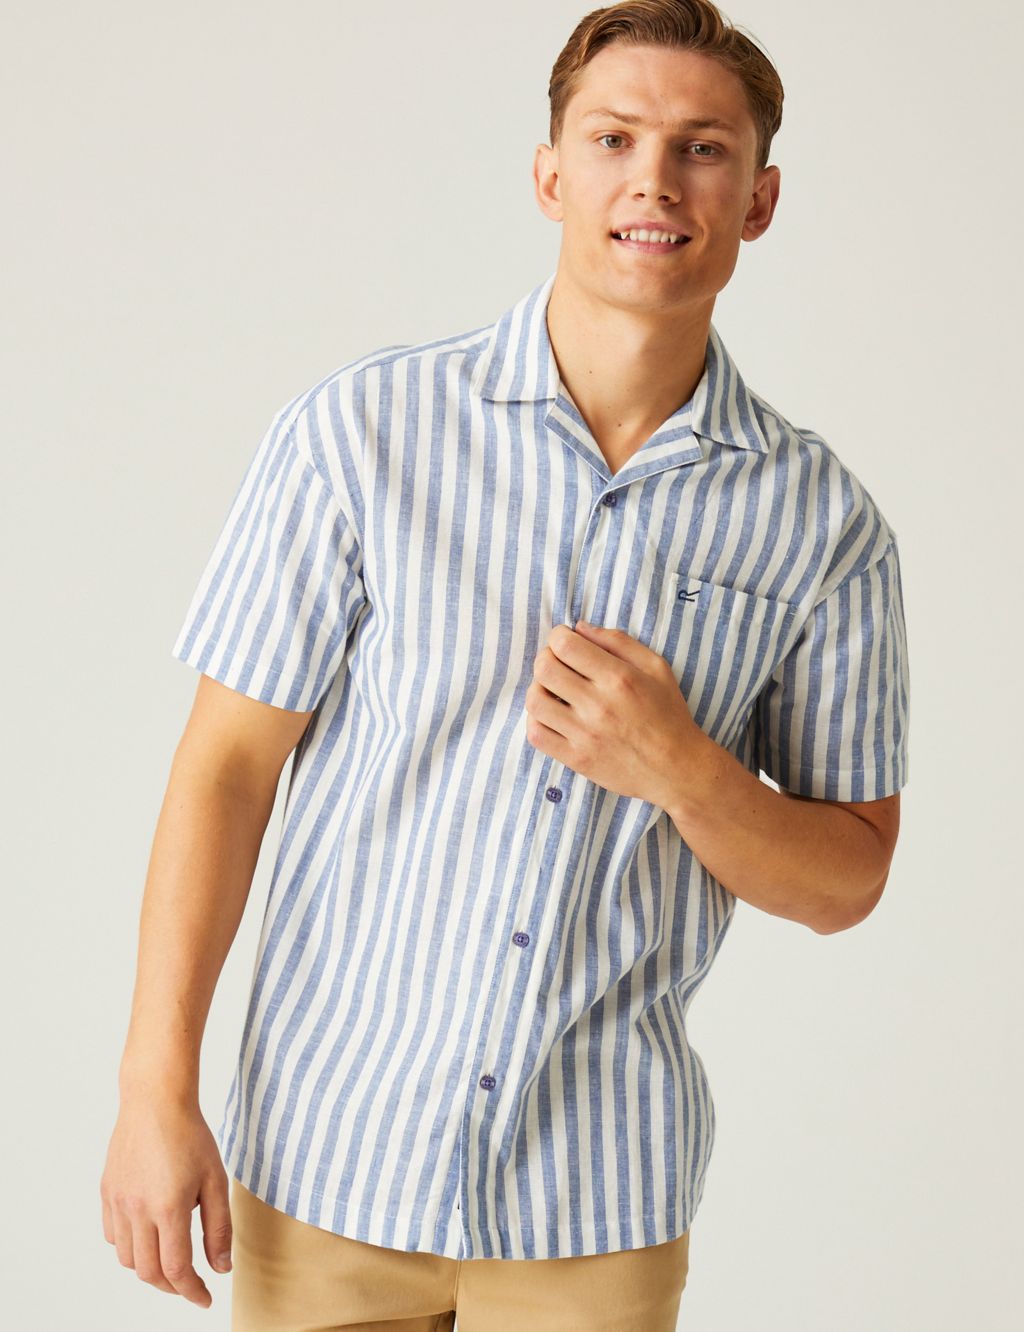 ShoreBay II Cotton Rich Striped Shirt